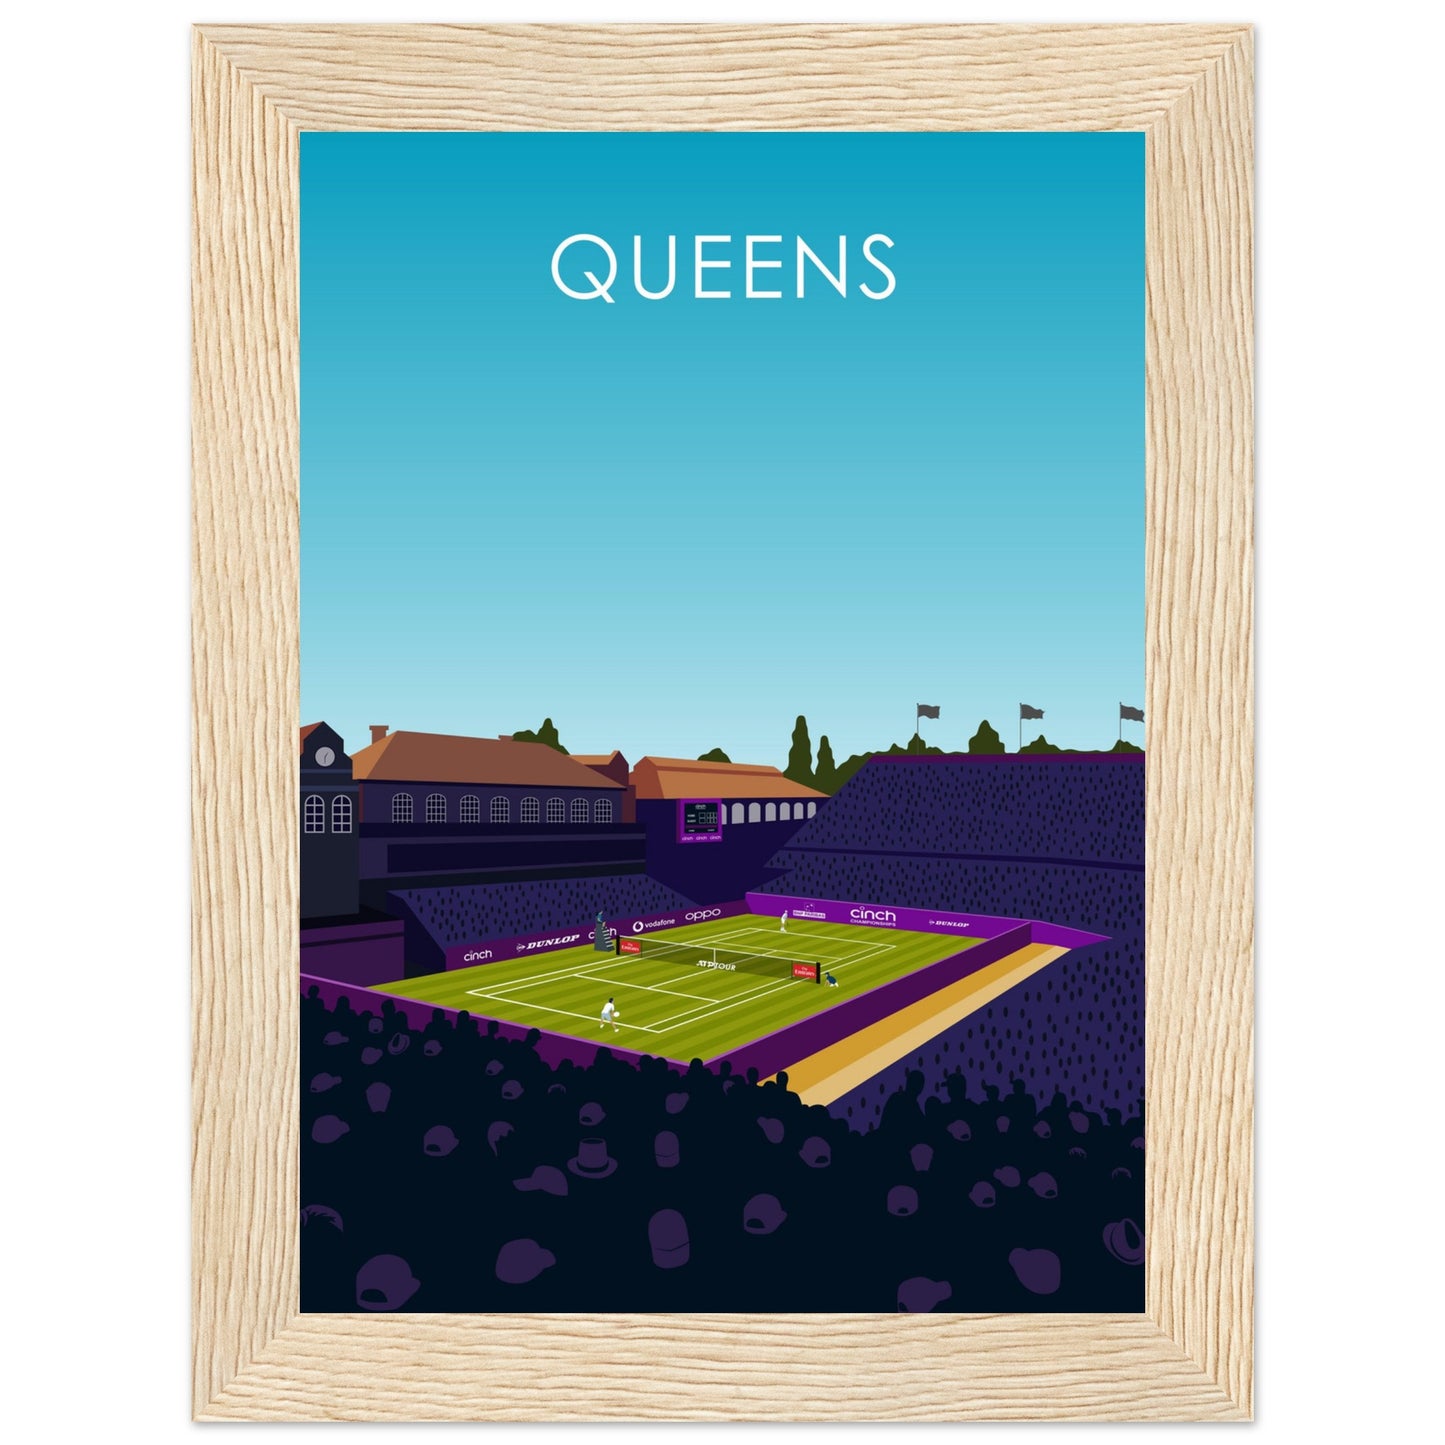 Queens Club Centre Court Cinch Championships Tennis Poster